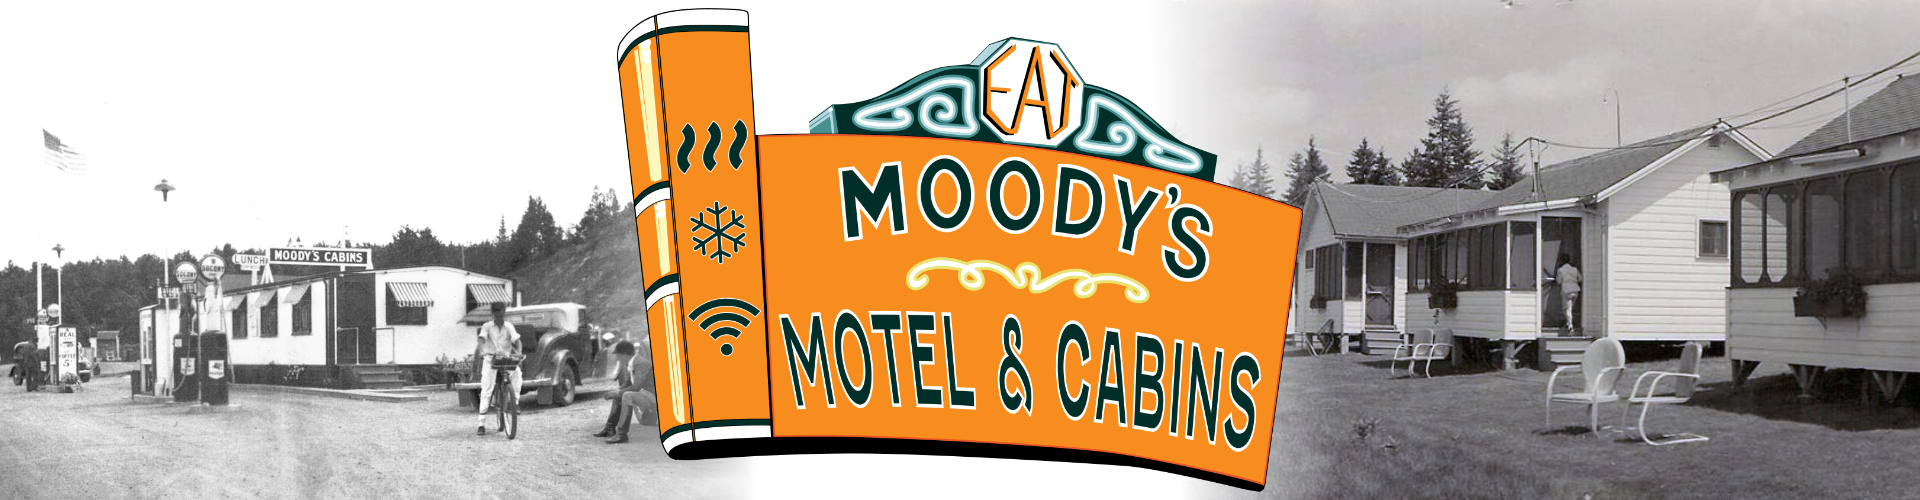 Moody's Motel & Cabins